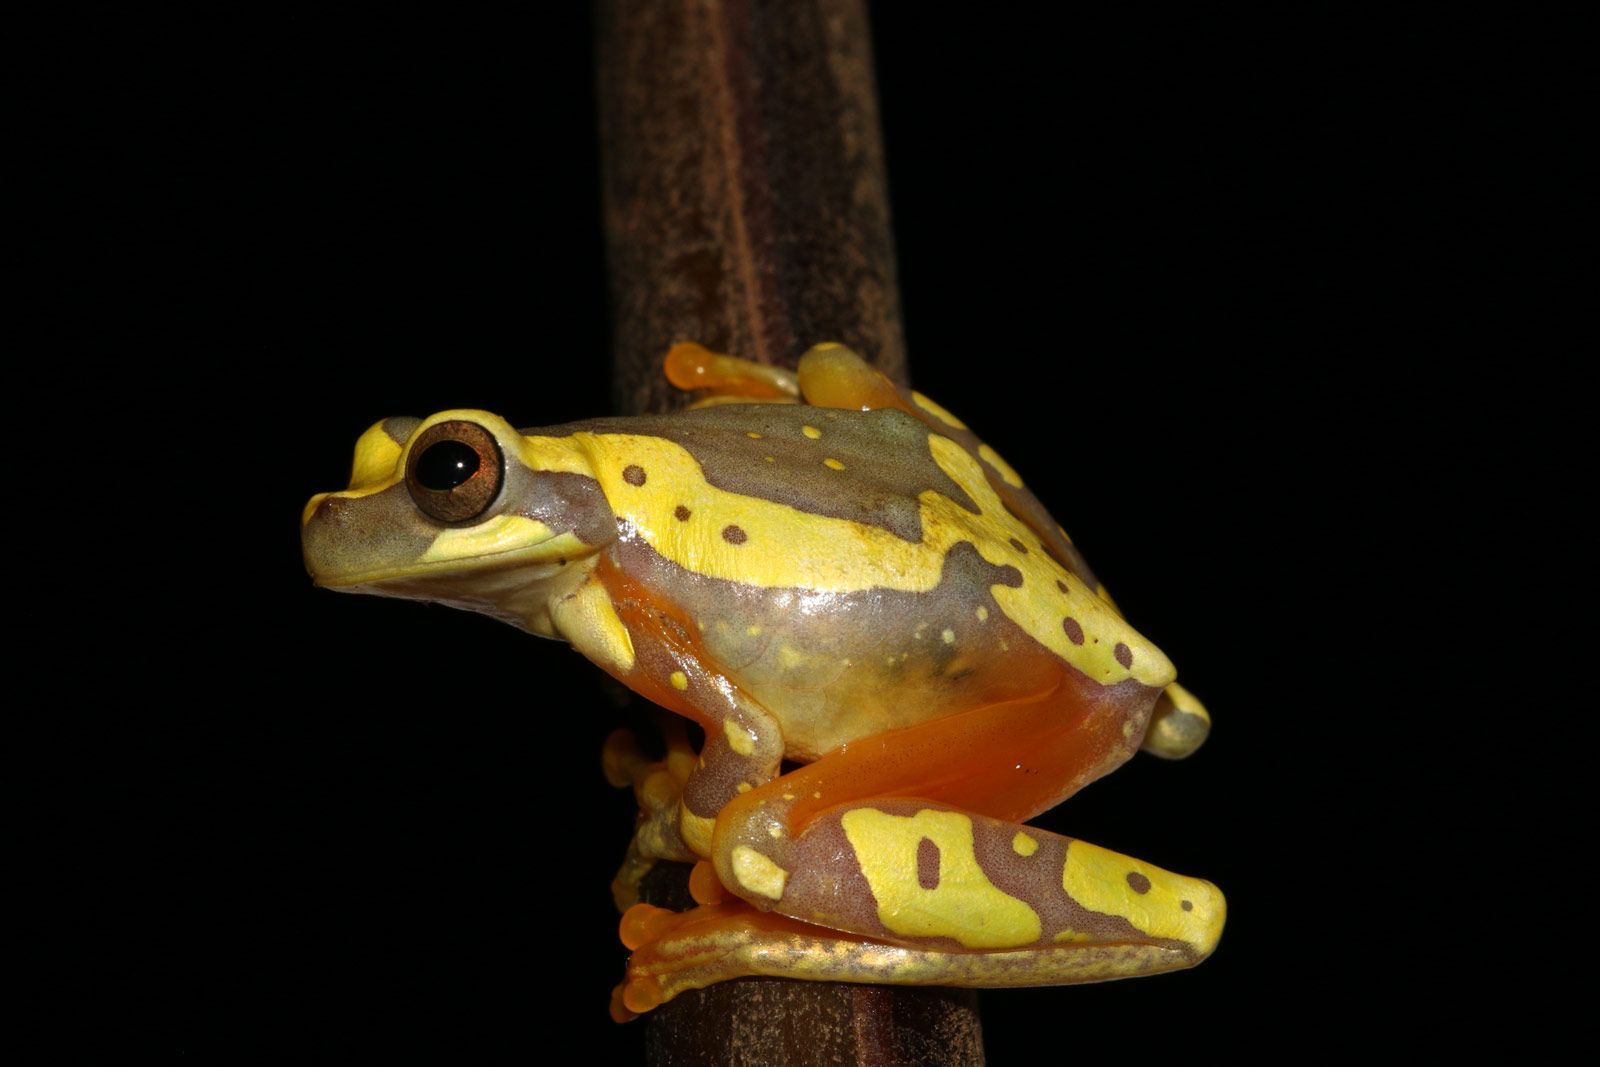 Hourglass Tree Frog (Dendropsophus ebraccatus)